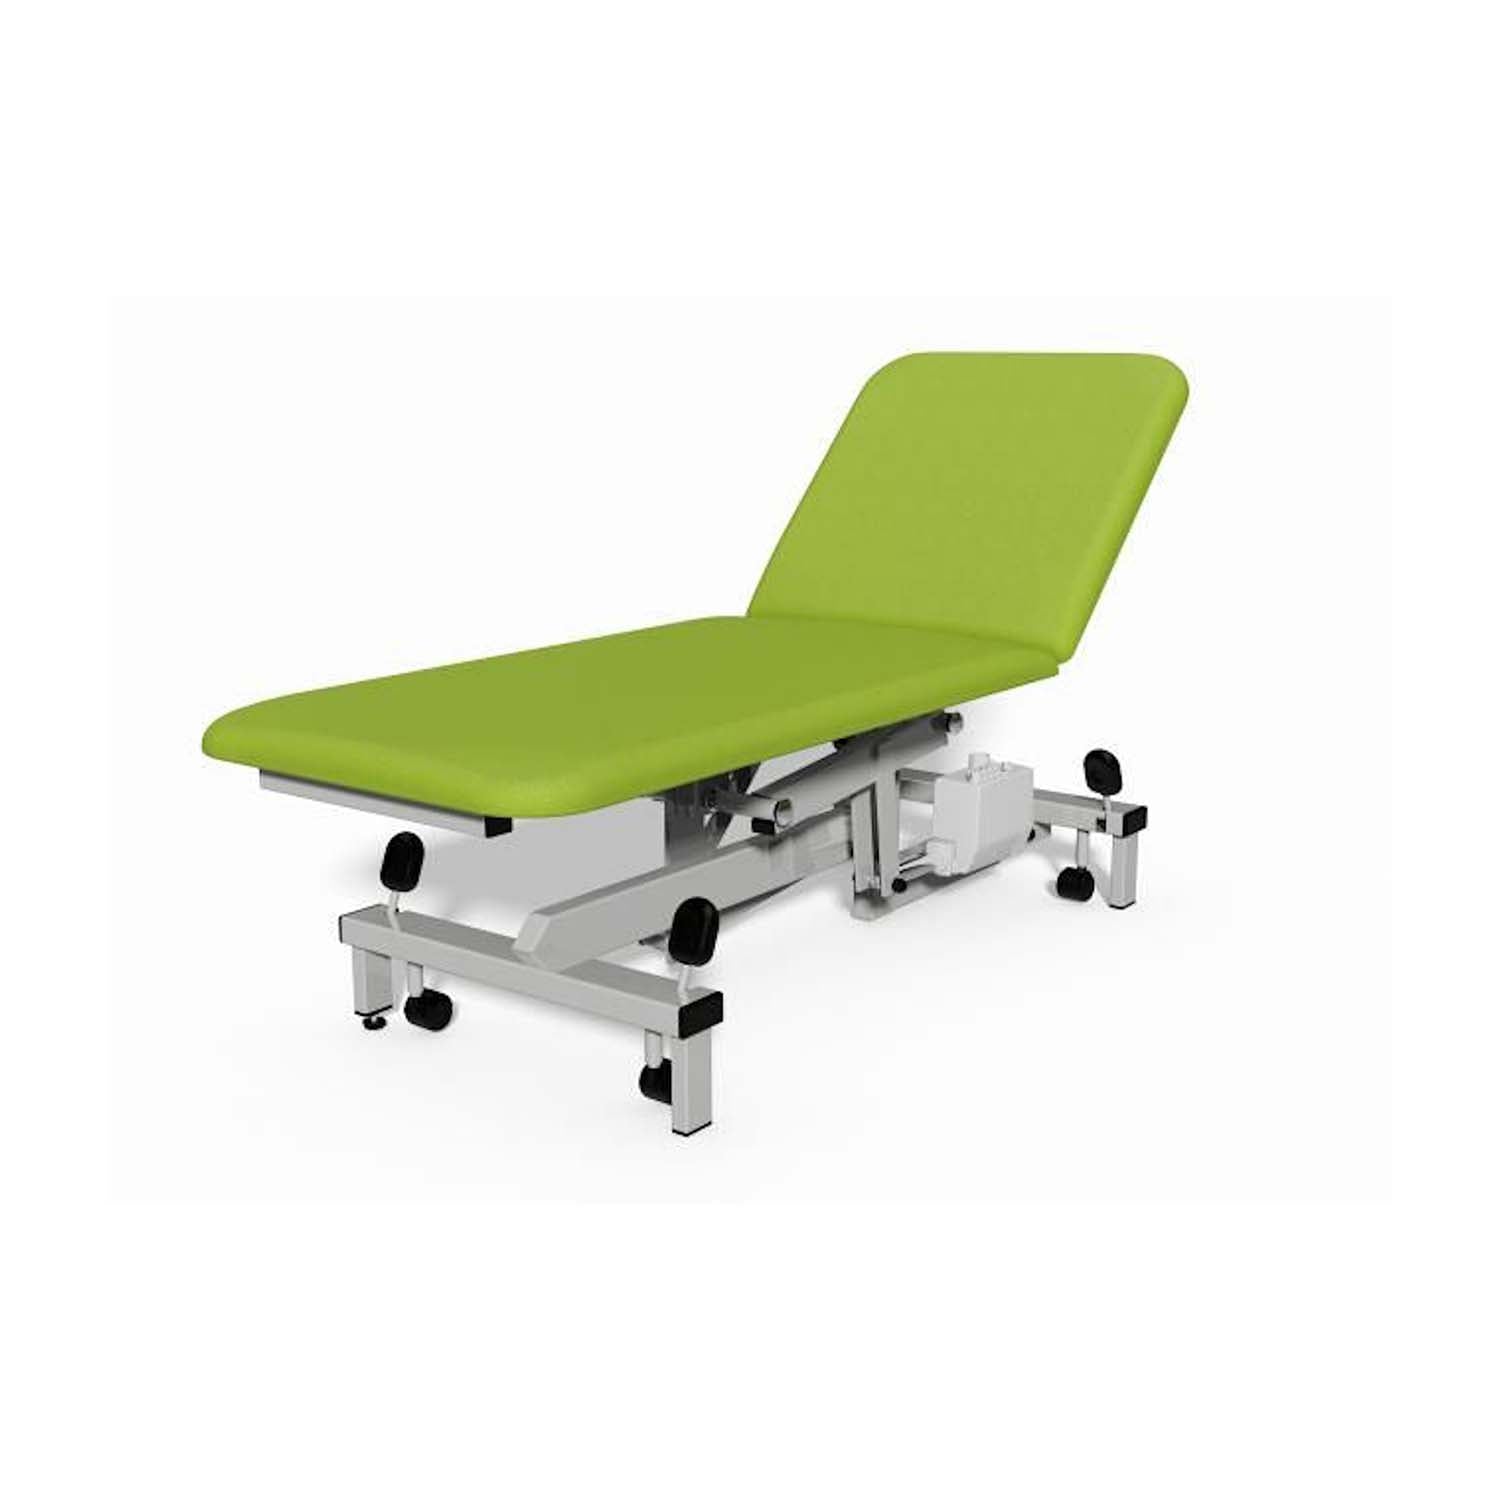 Plinth 2000 Model 502 Examination Couch | Hydraulic | Citrus Green